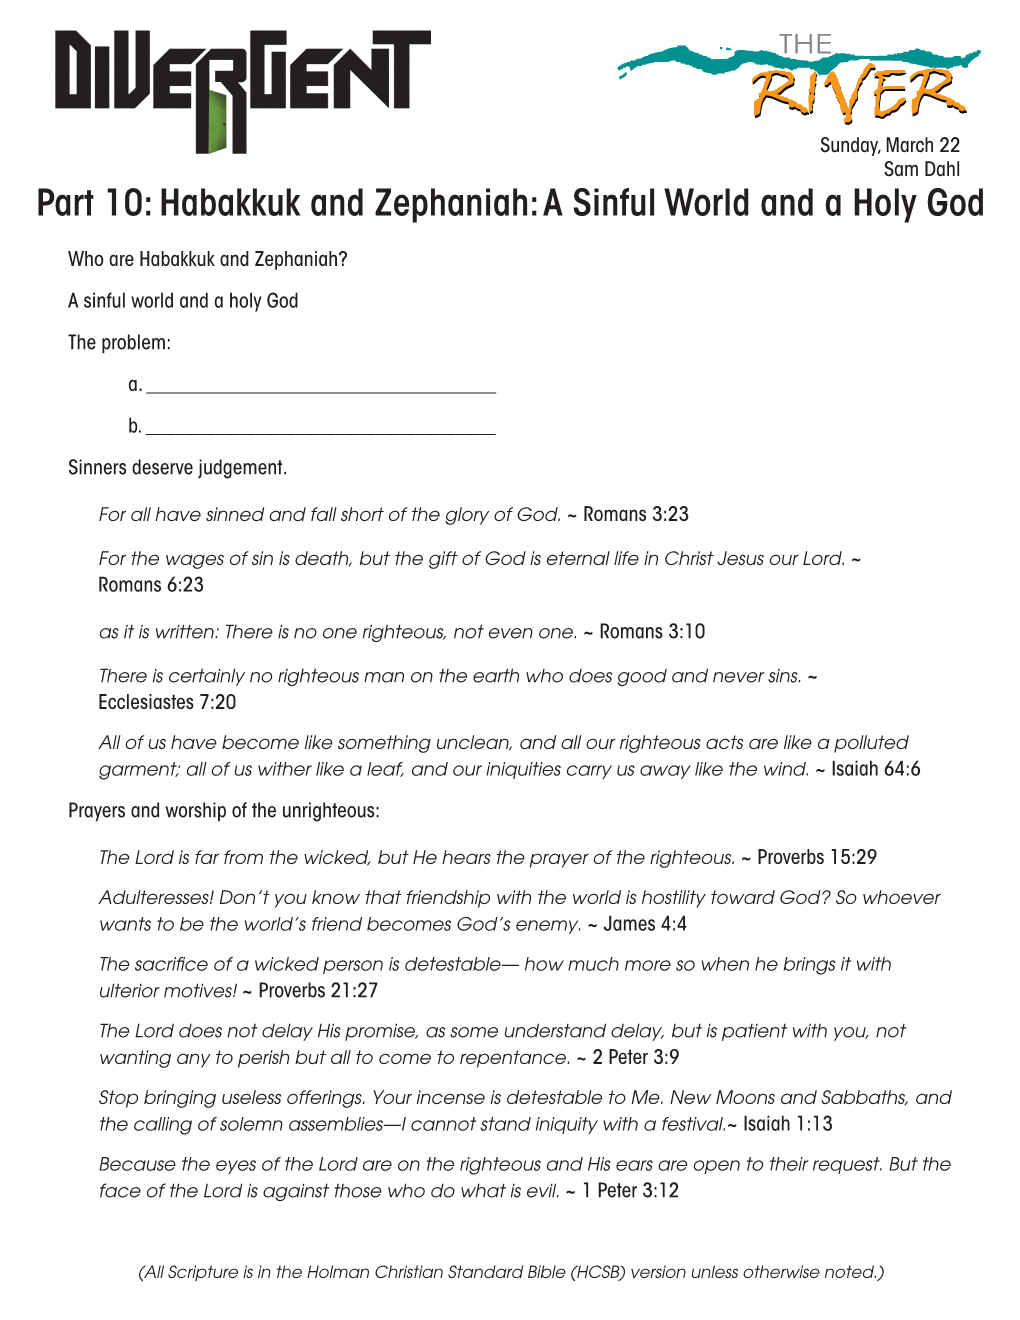 Part 10: Habakkuk and Zephaniah: a Sinful World and a Holy God